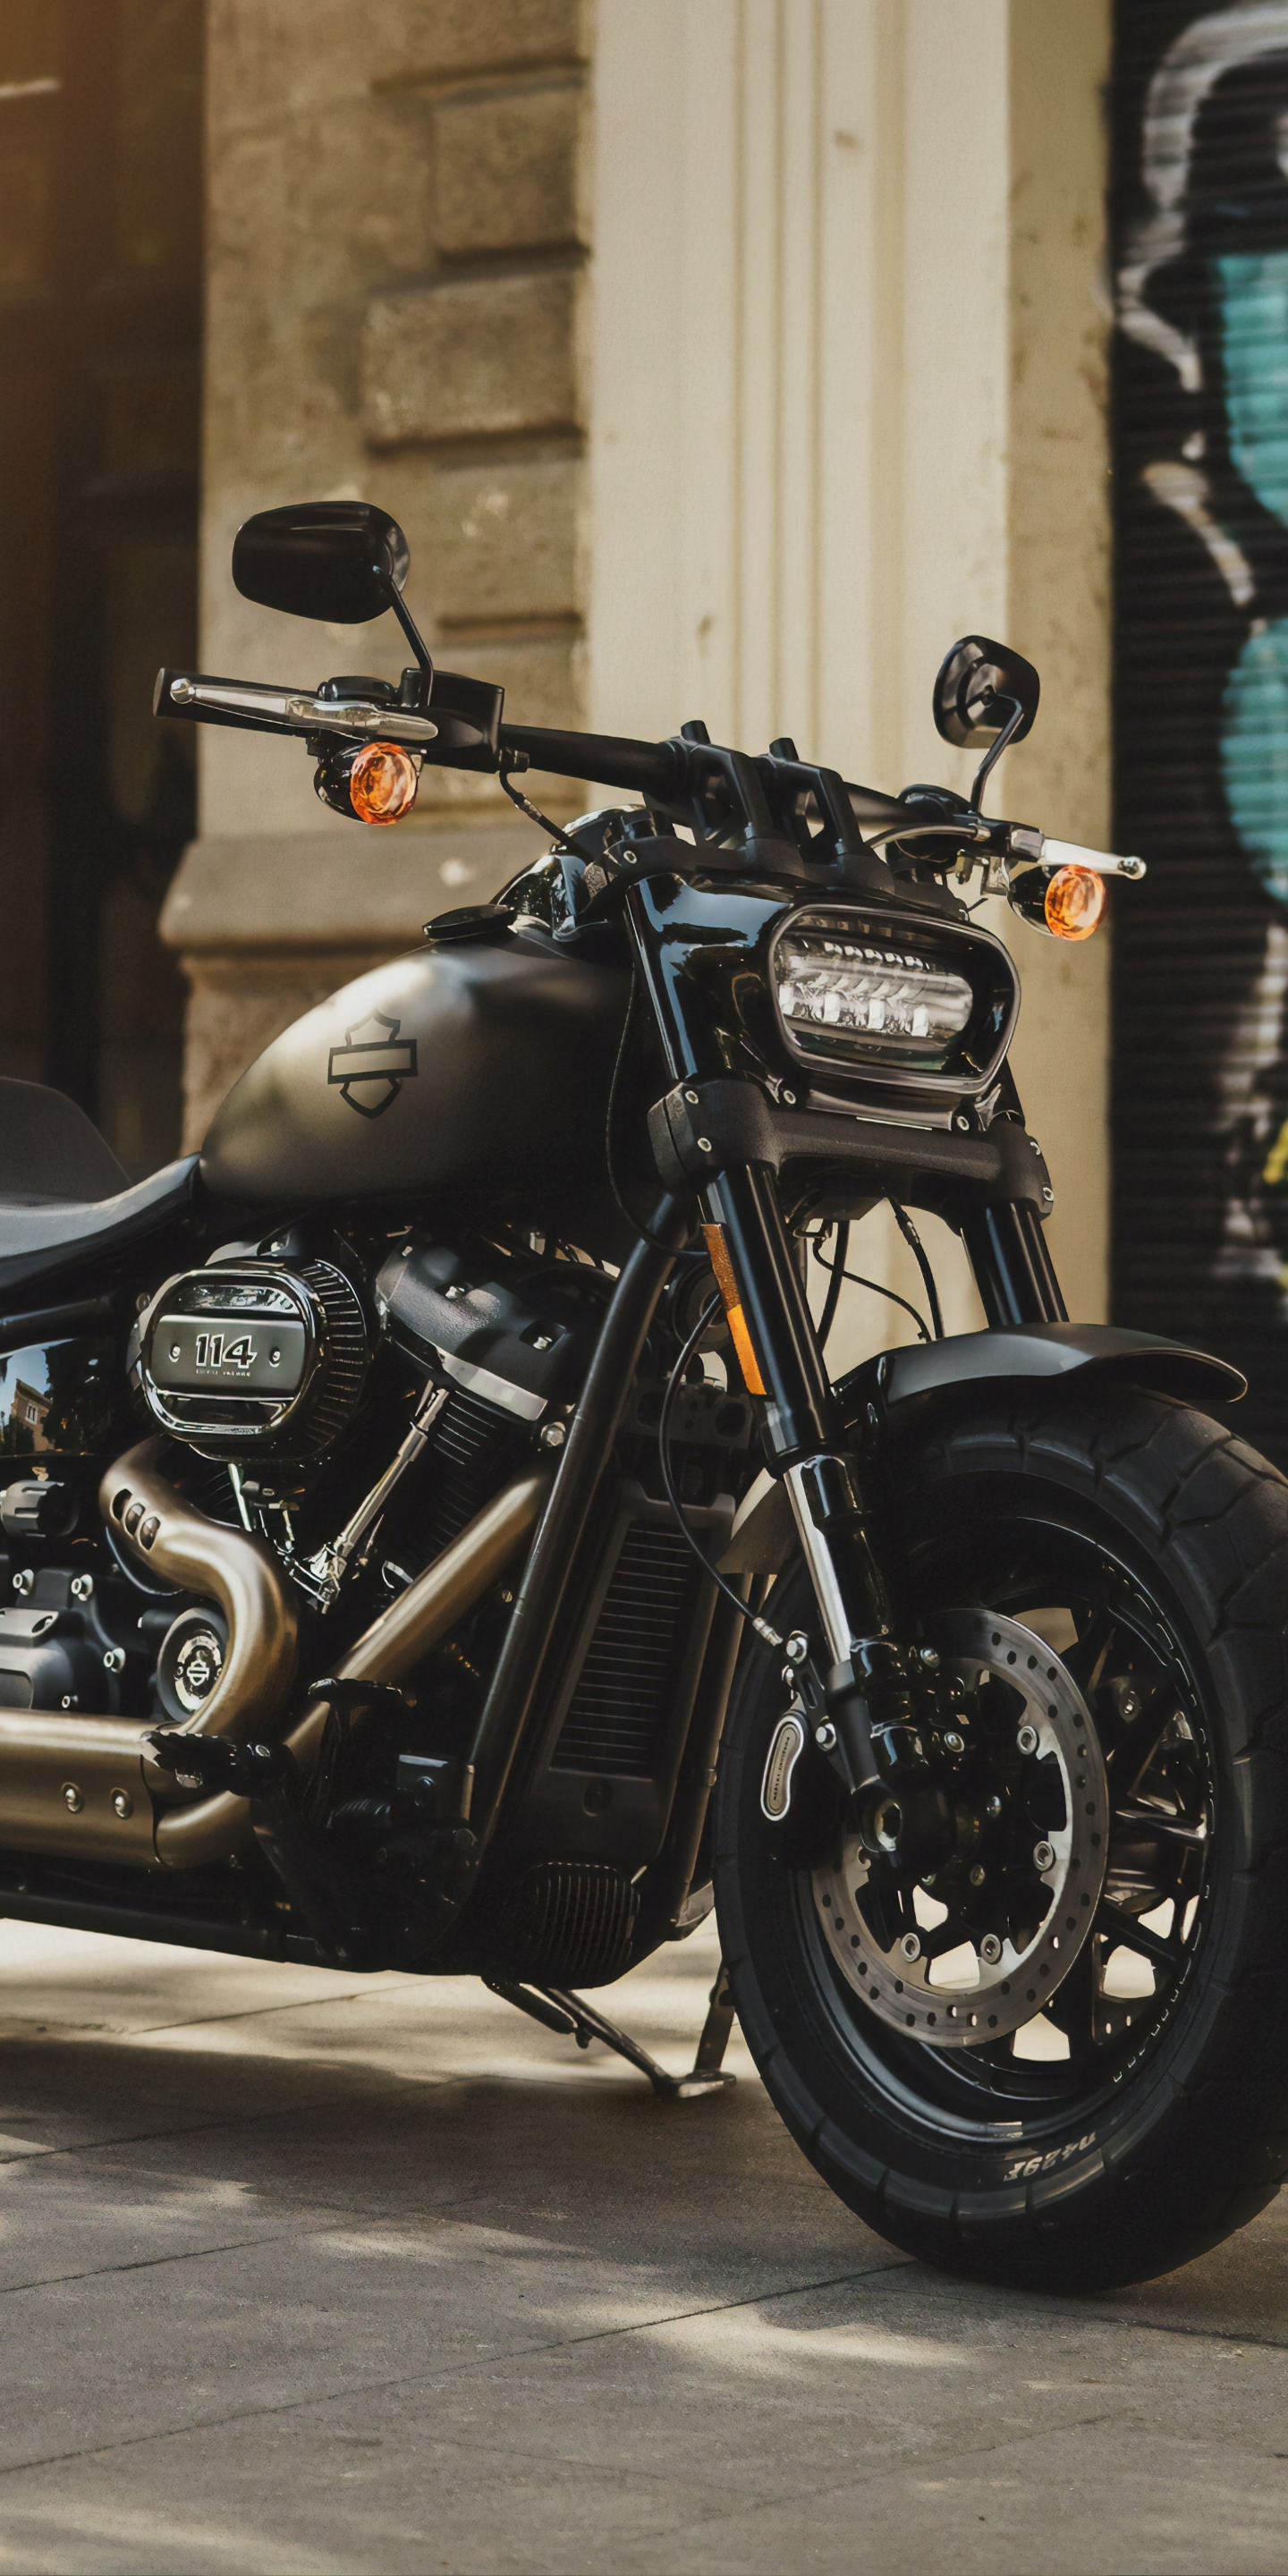 2019 Harley-Davidson, motorcycle, 1440x2880 wallpaper